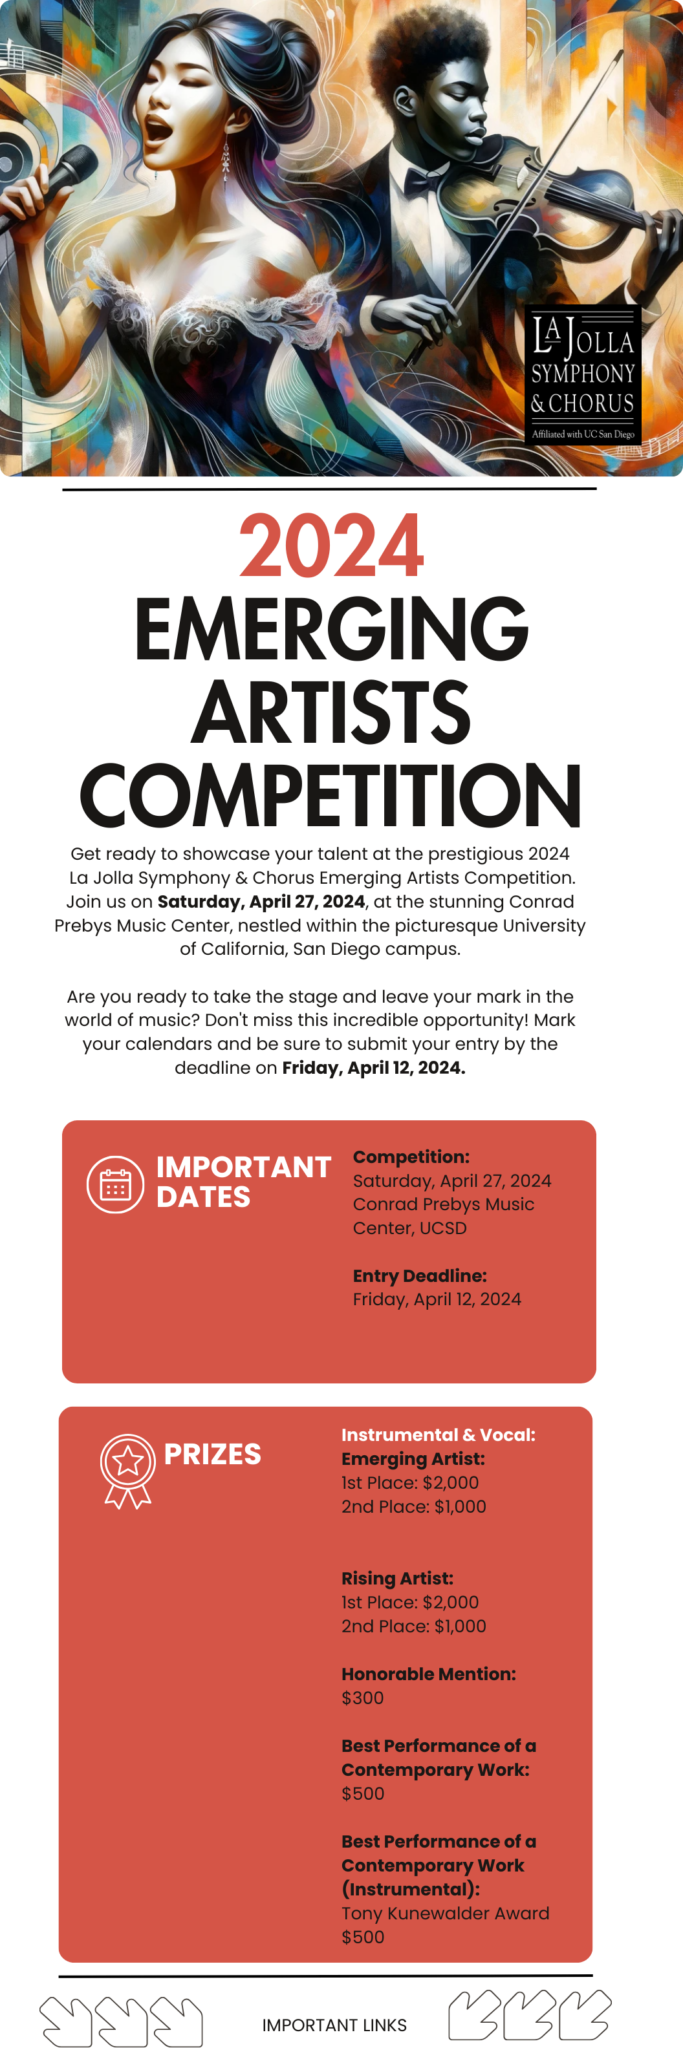 2024 Emerging Artists Competition La Jolla Symphony & Chorus